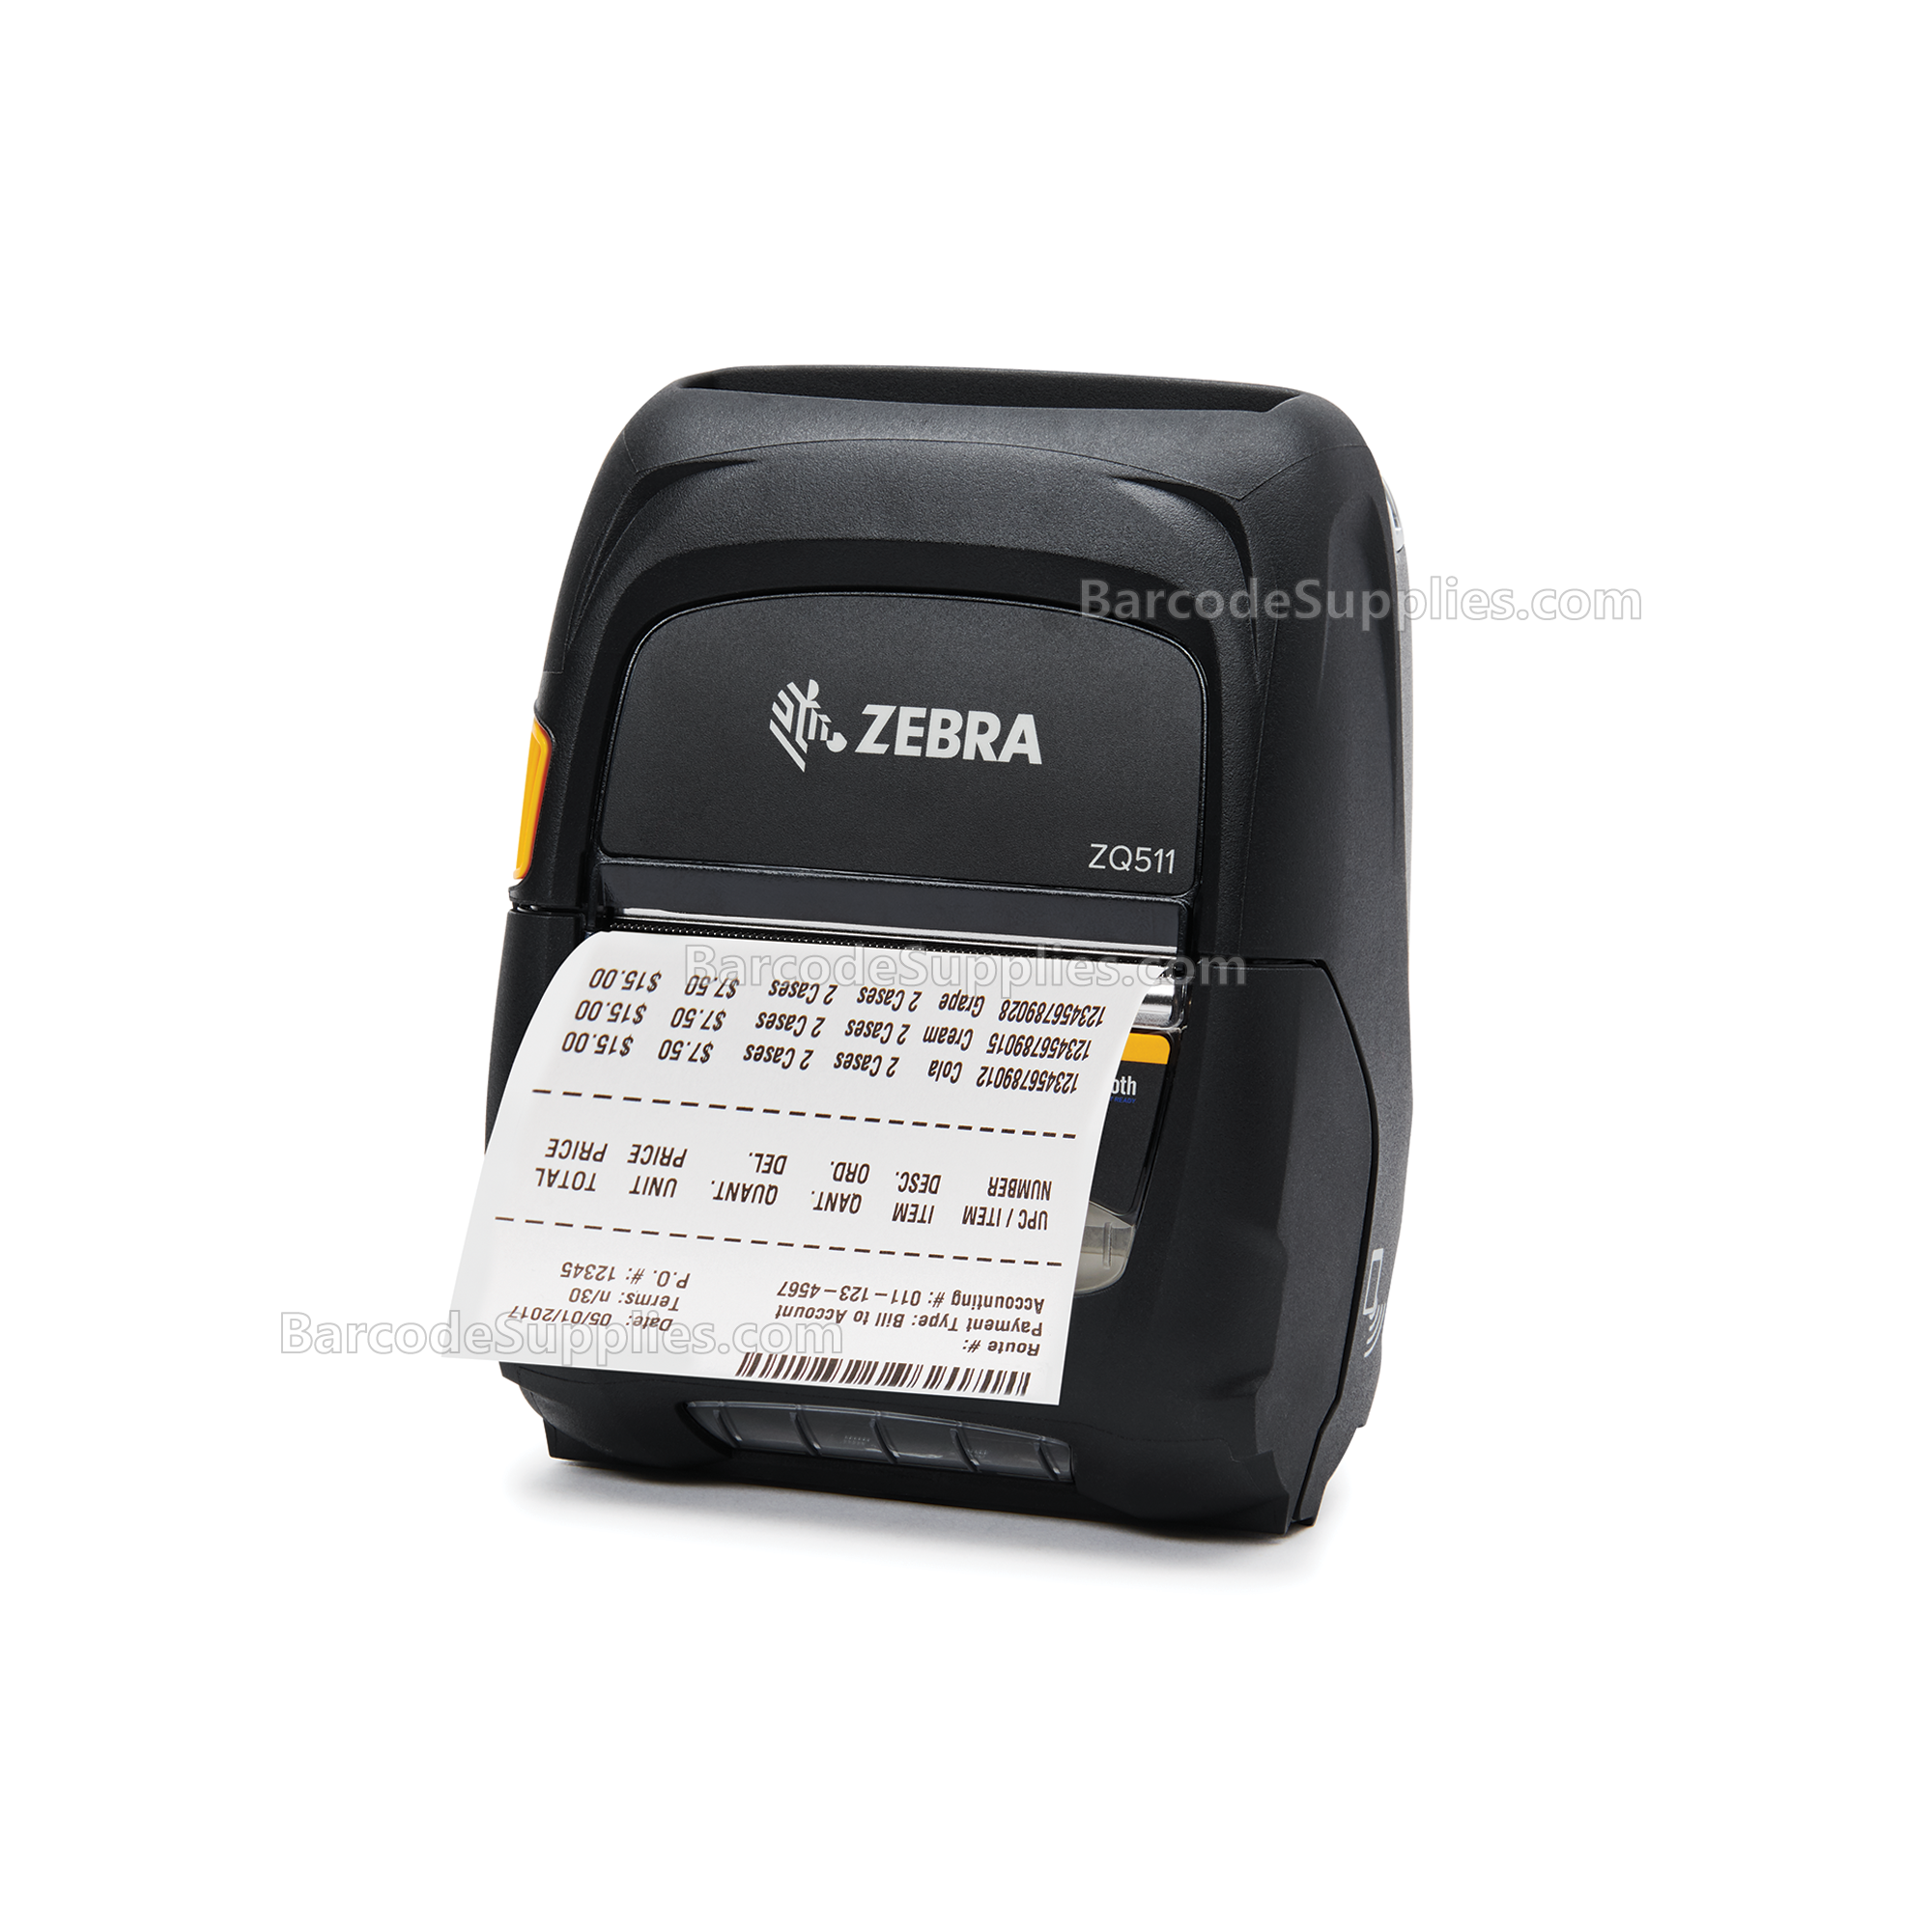 Zebra ZQ511 Mobile Printer - media width 3.15/80mm; English/Latin fonts, 802.11ac/Bluetooth 4.1, stnd battery, US/Canada certs - MPN: ZQ51-BUW0000-00